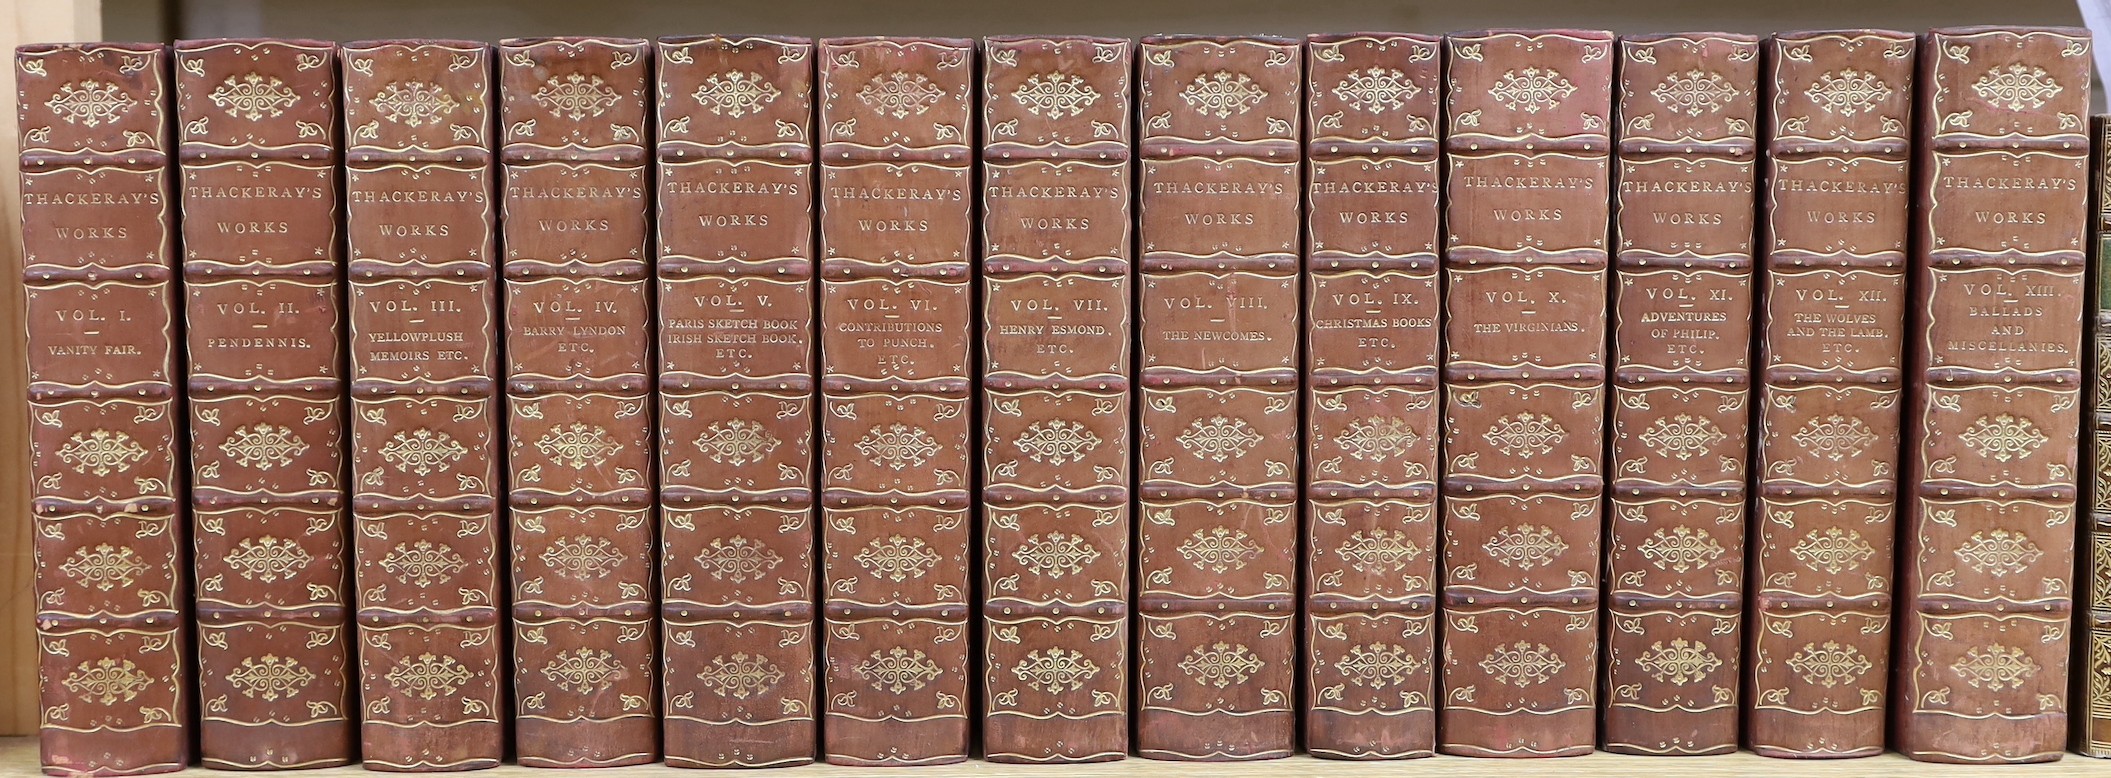 Thackeray, William Makepiece - The Works, 13 vols, 8vo, half calf, Smith, Elder, & Co., London, 1898-99                                                                                                                     